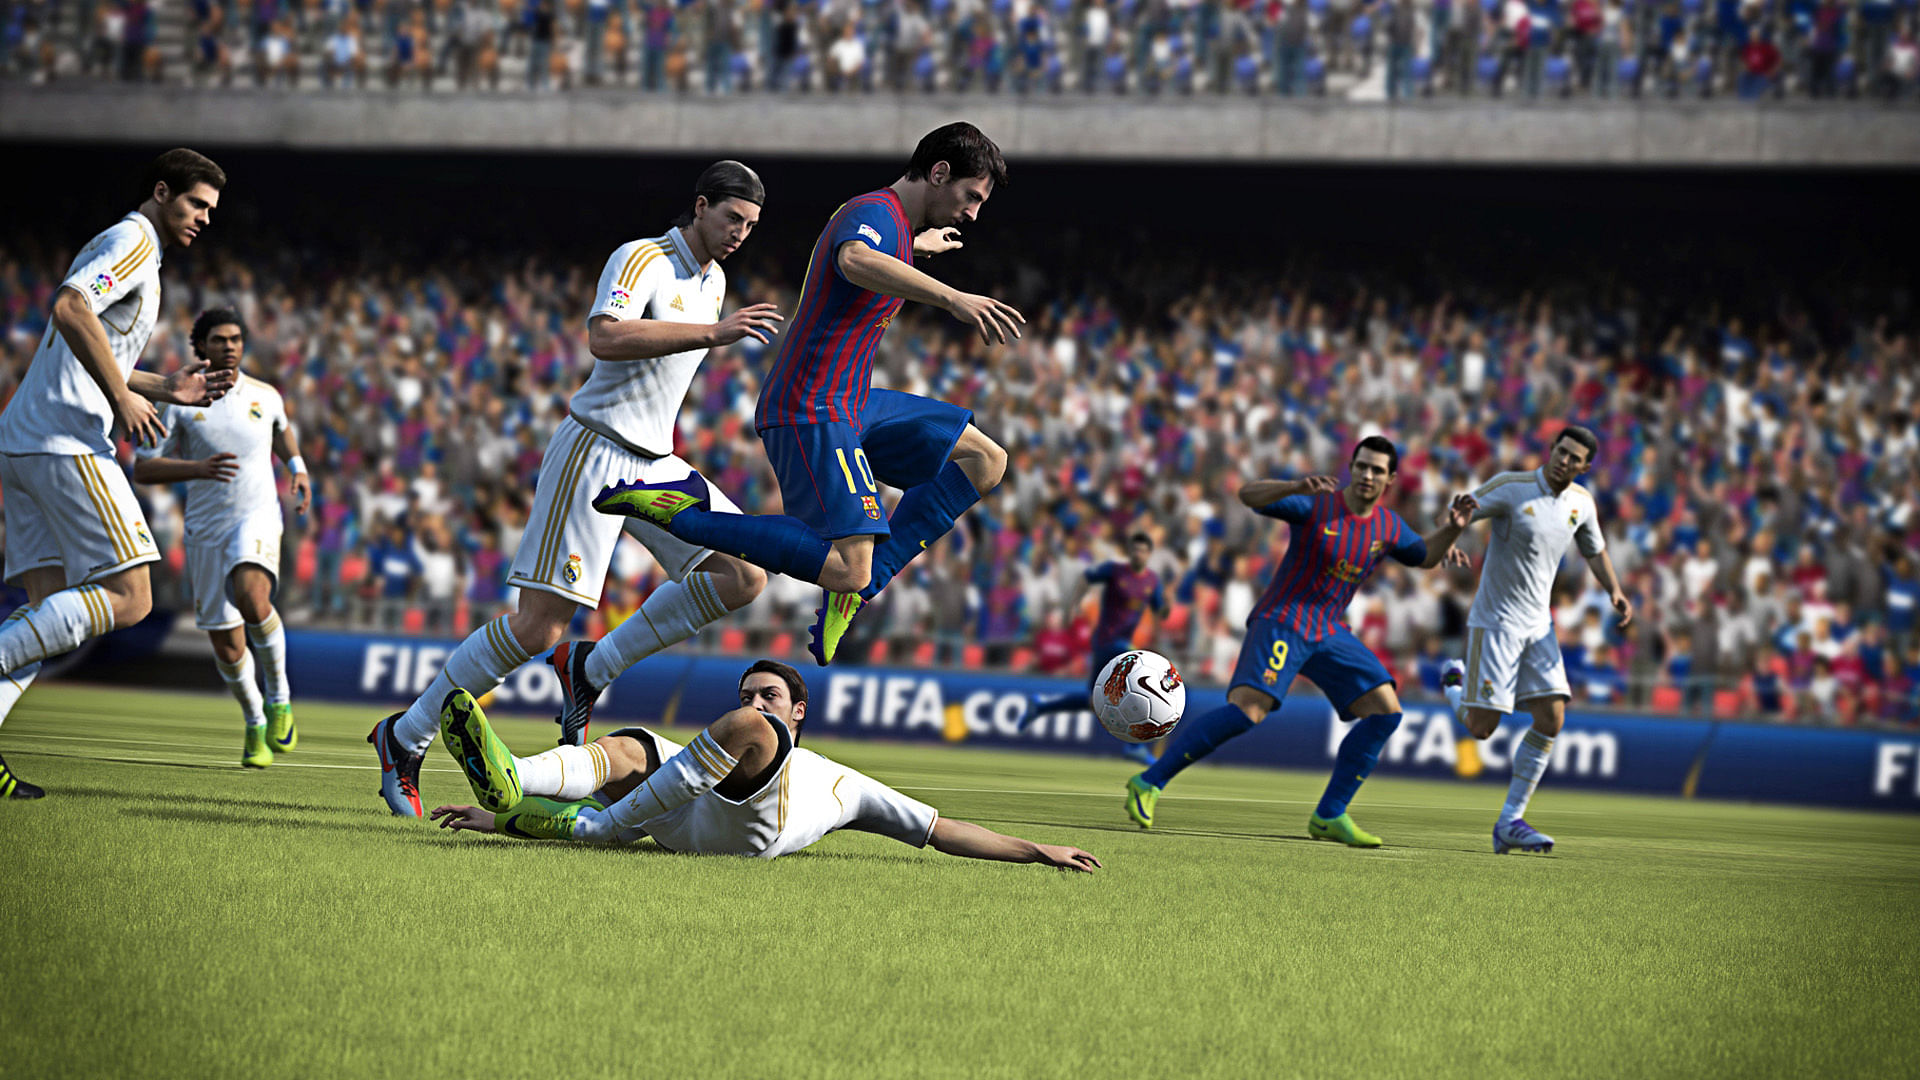 FIFA 13 Messi